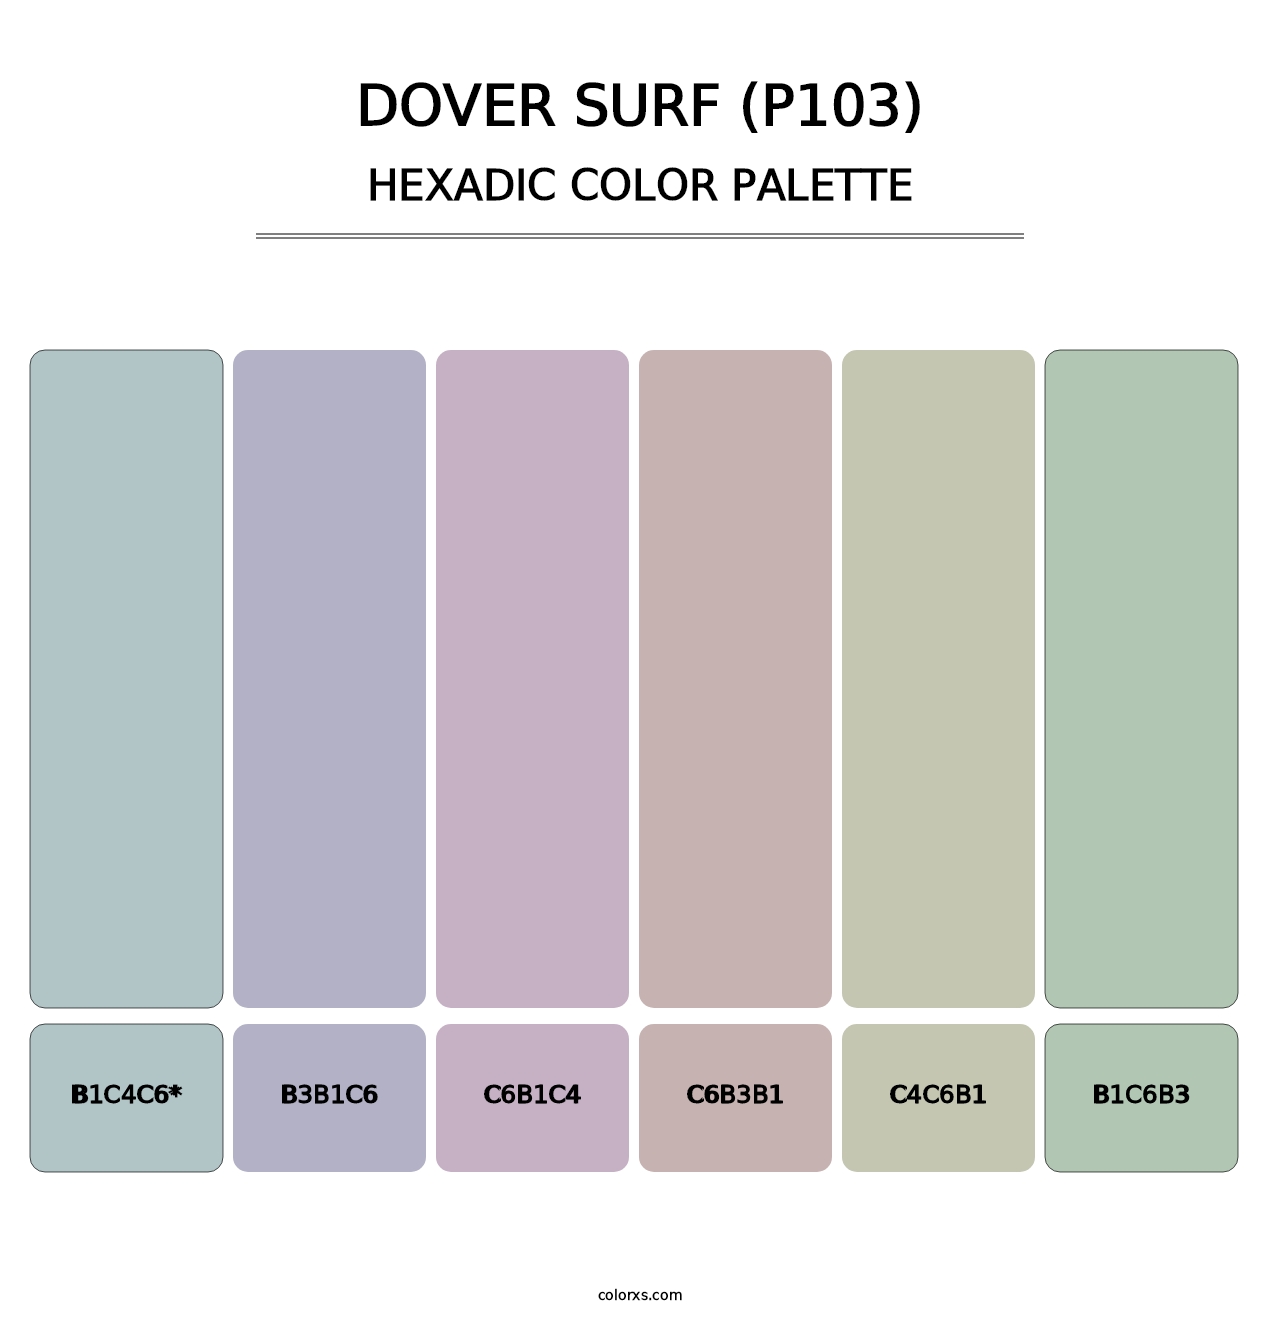 Dover Surf (P103) - Hexadic Color Palette